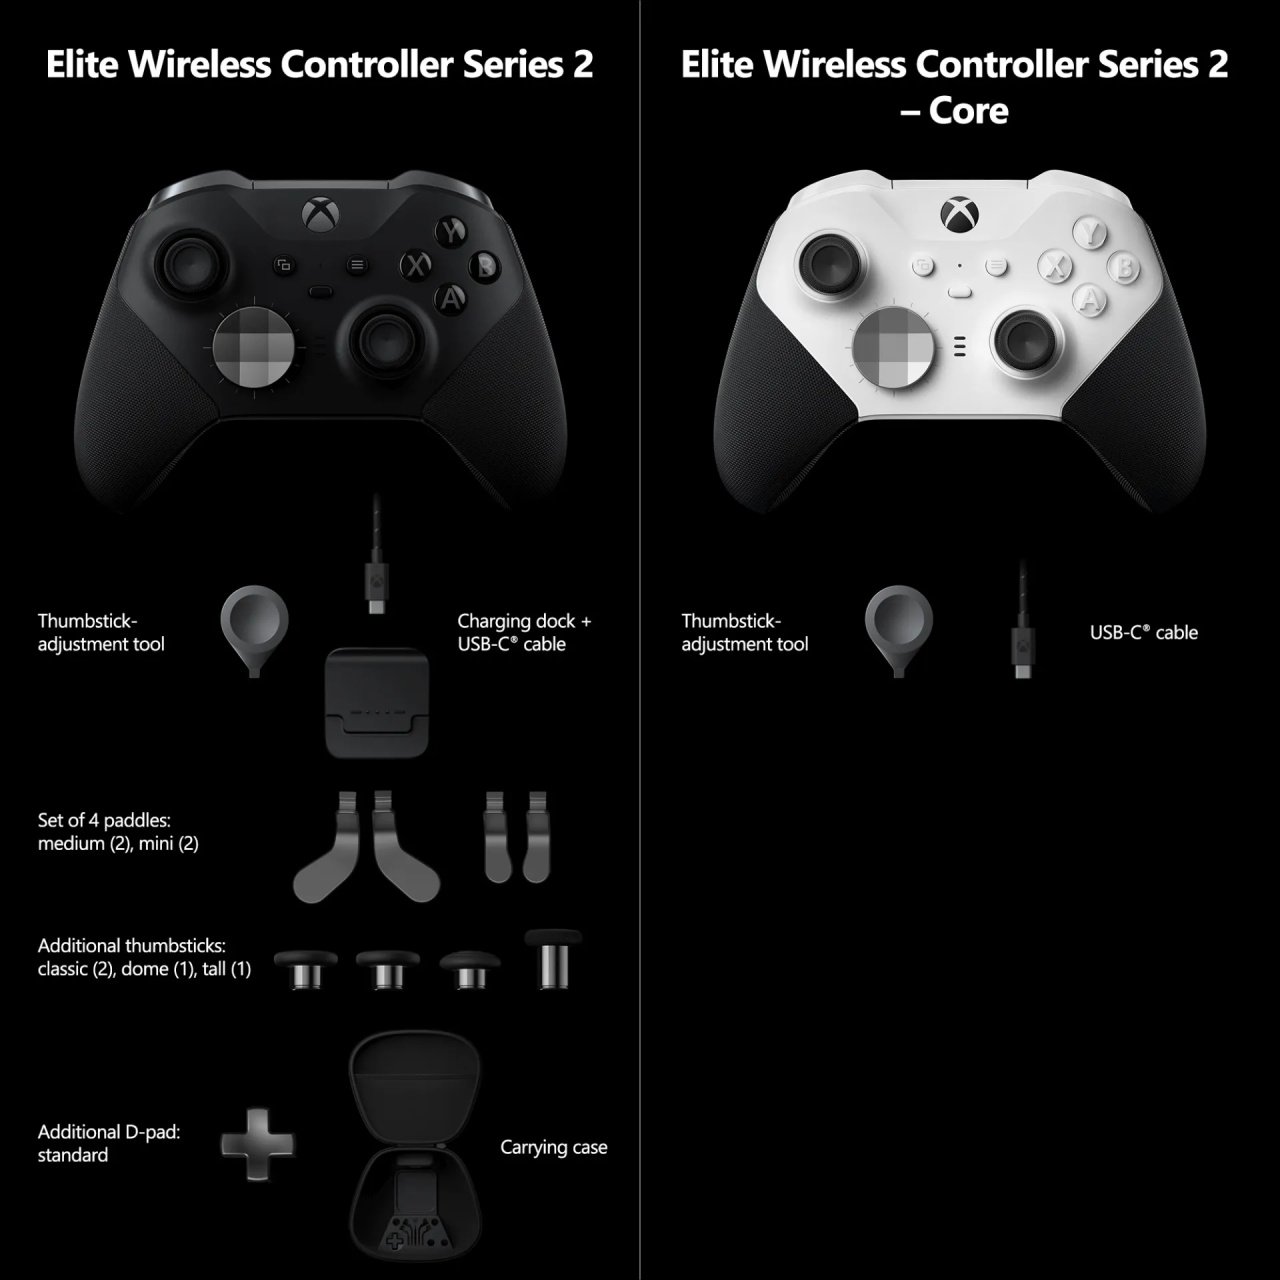 Pre-order Halo Infinite Xbox Elite Wireless Controller Series 2